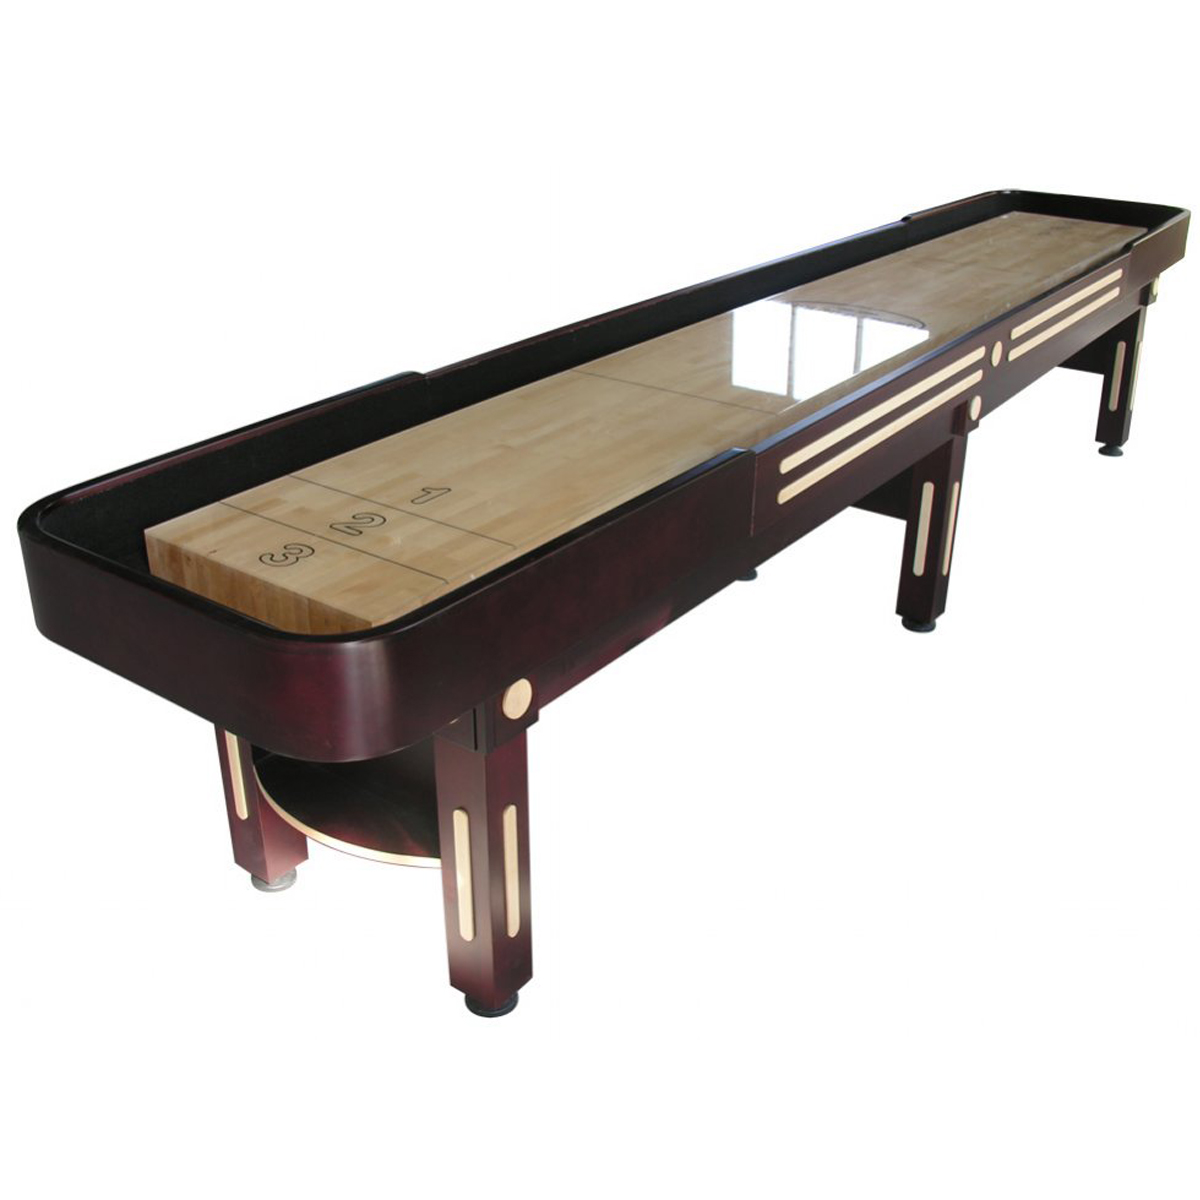 The-Majestic-Shuffleboard-Table-1-1.jpg